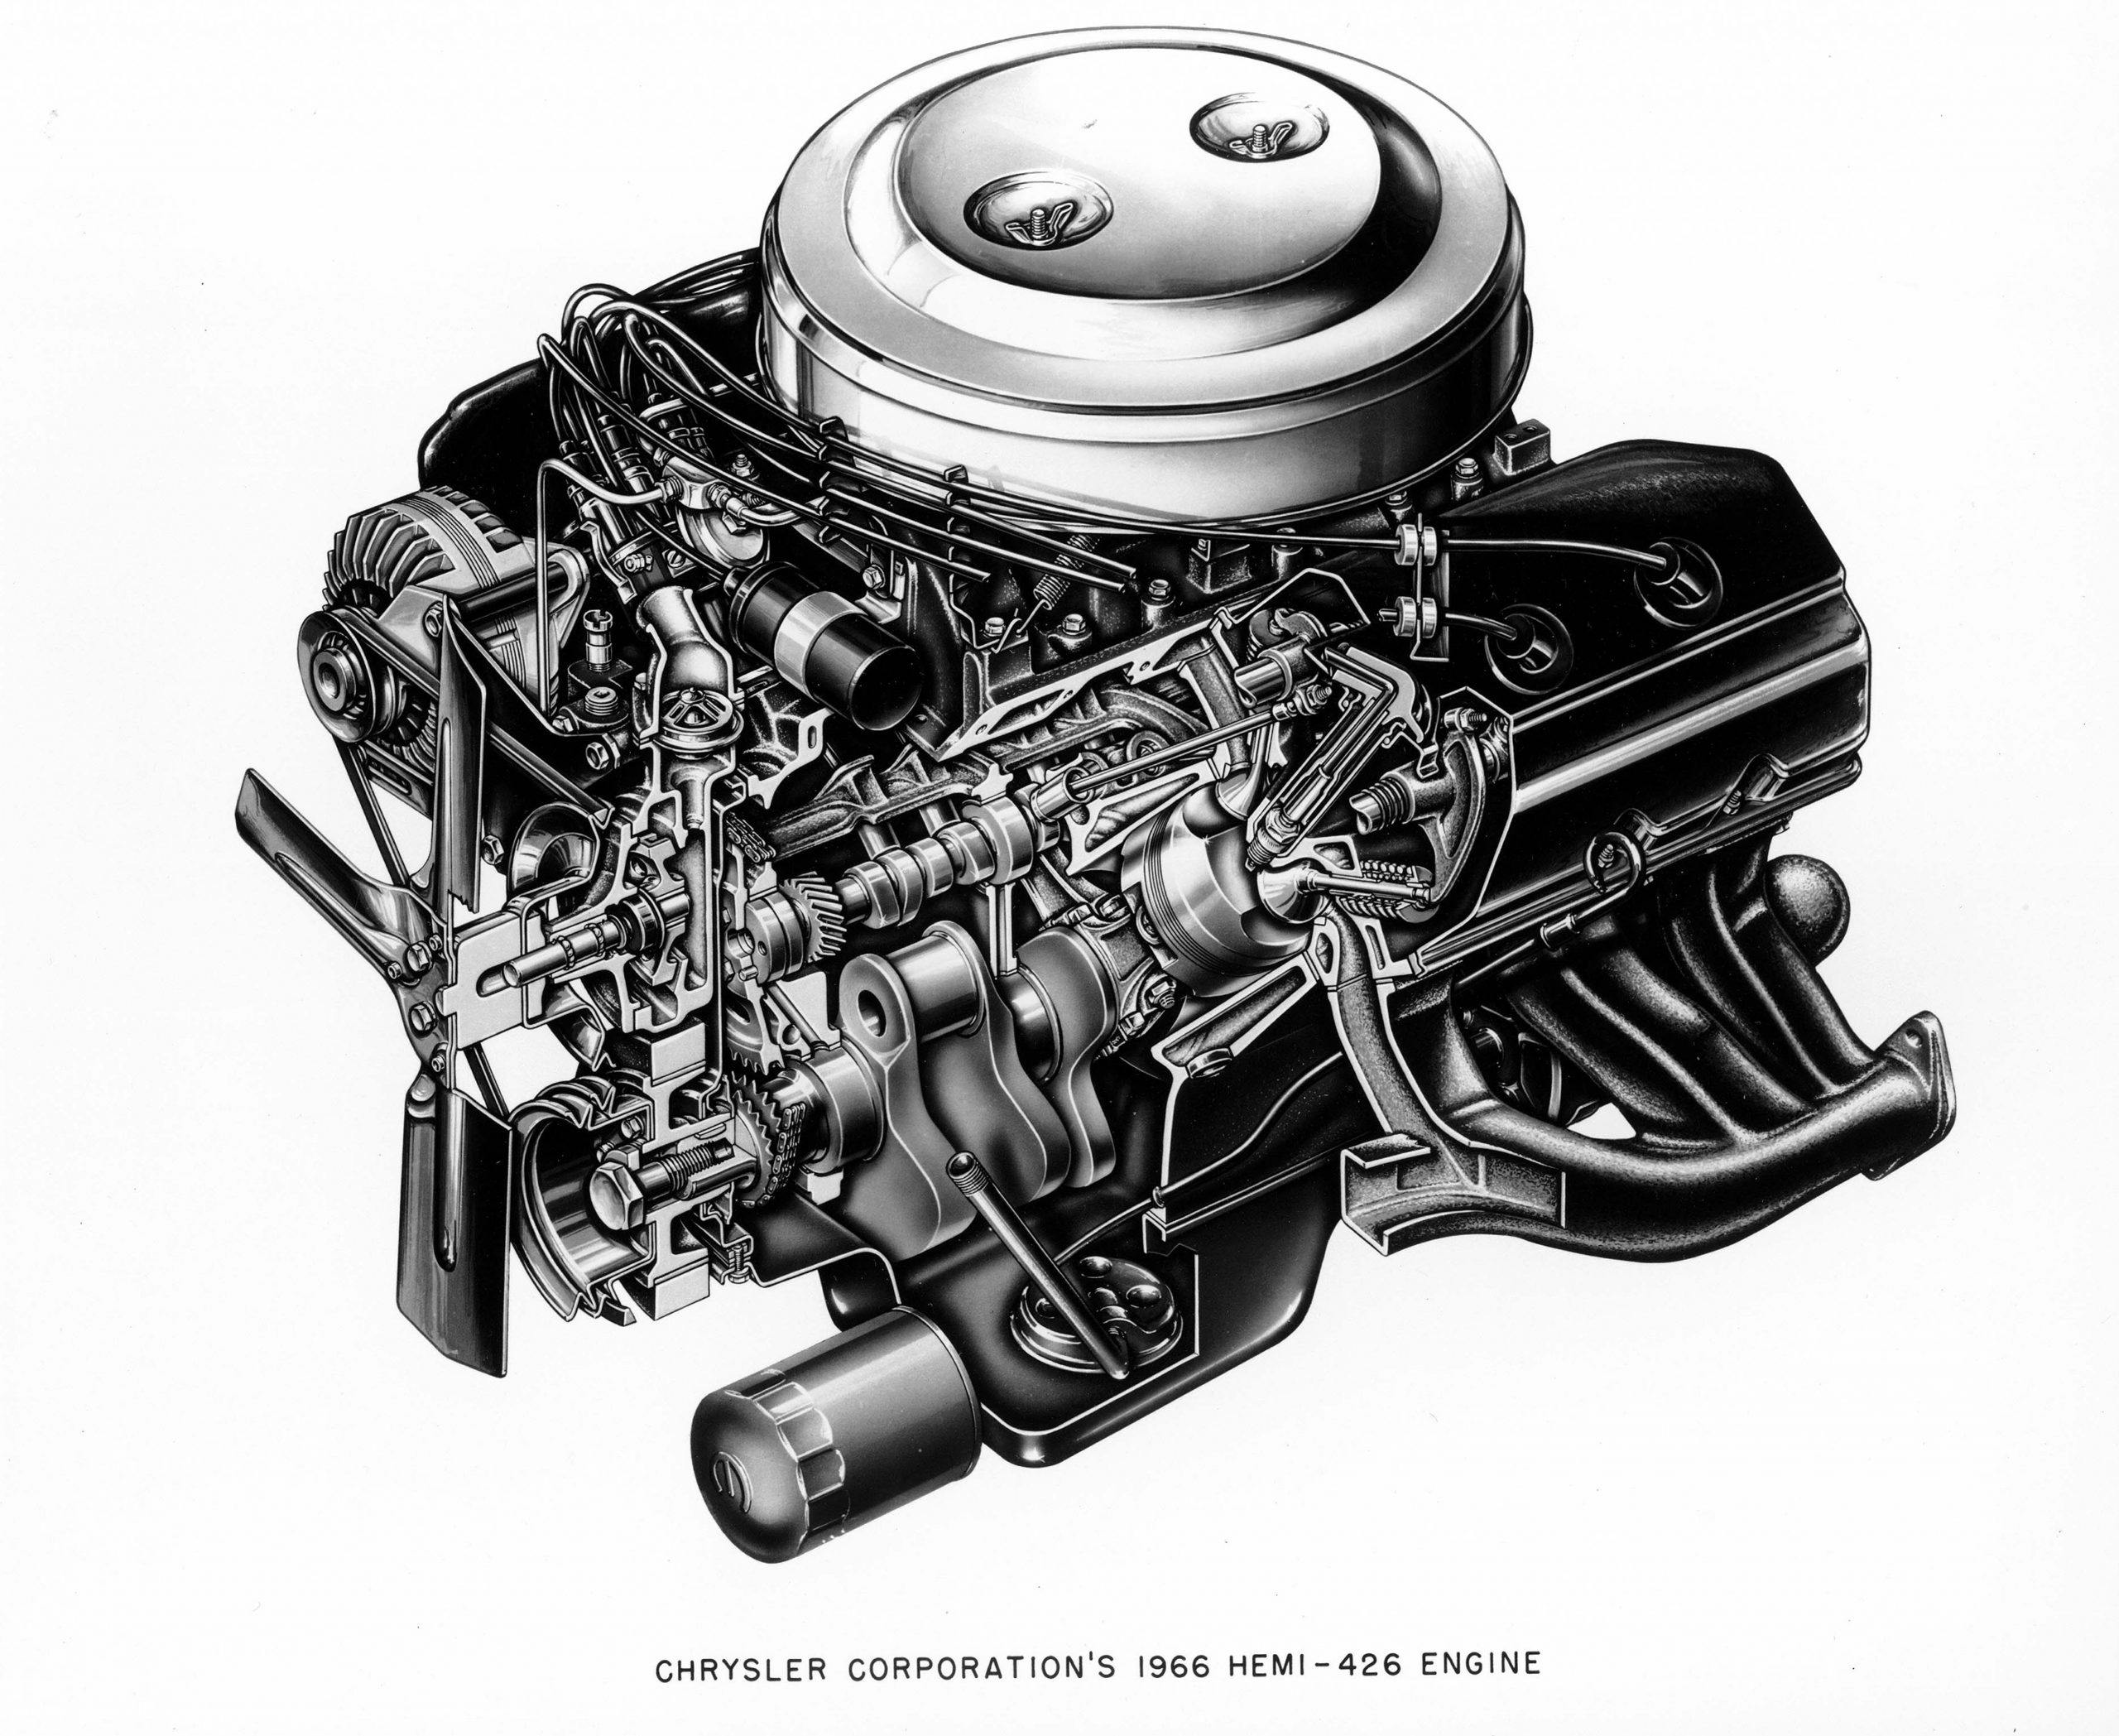 1966 Chrysler Corporation's HEMI - 426 Engine - cutaway